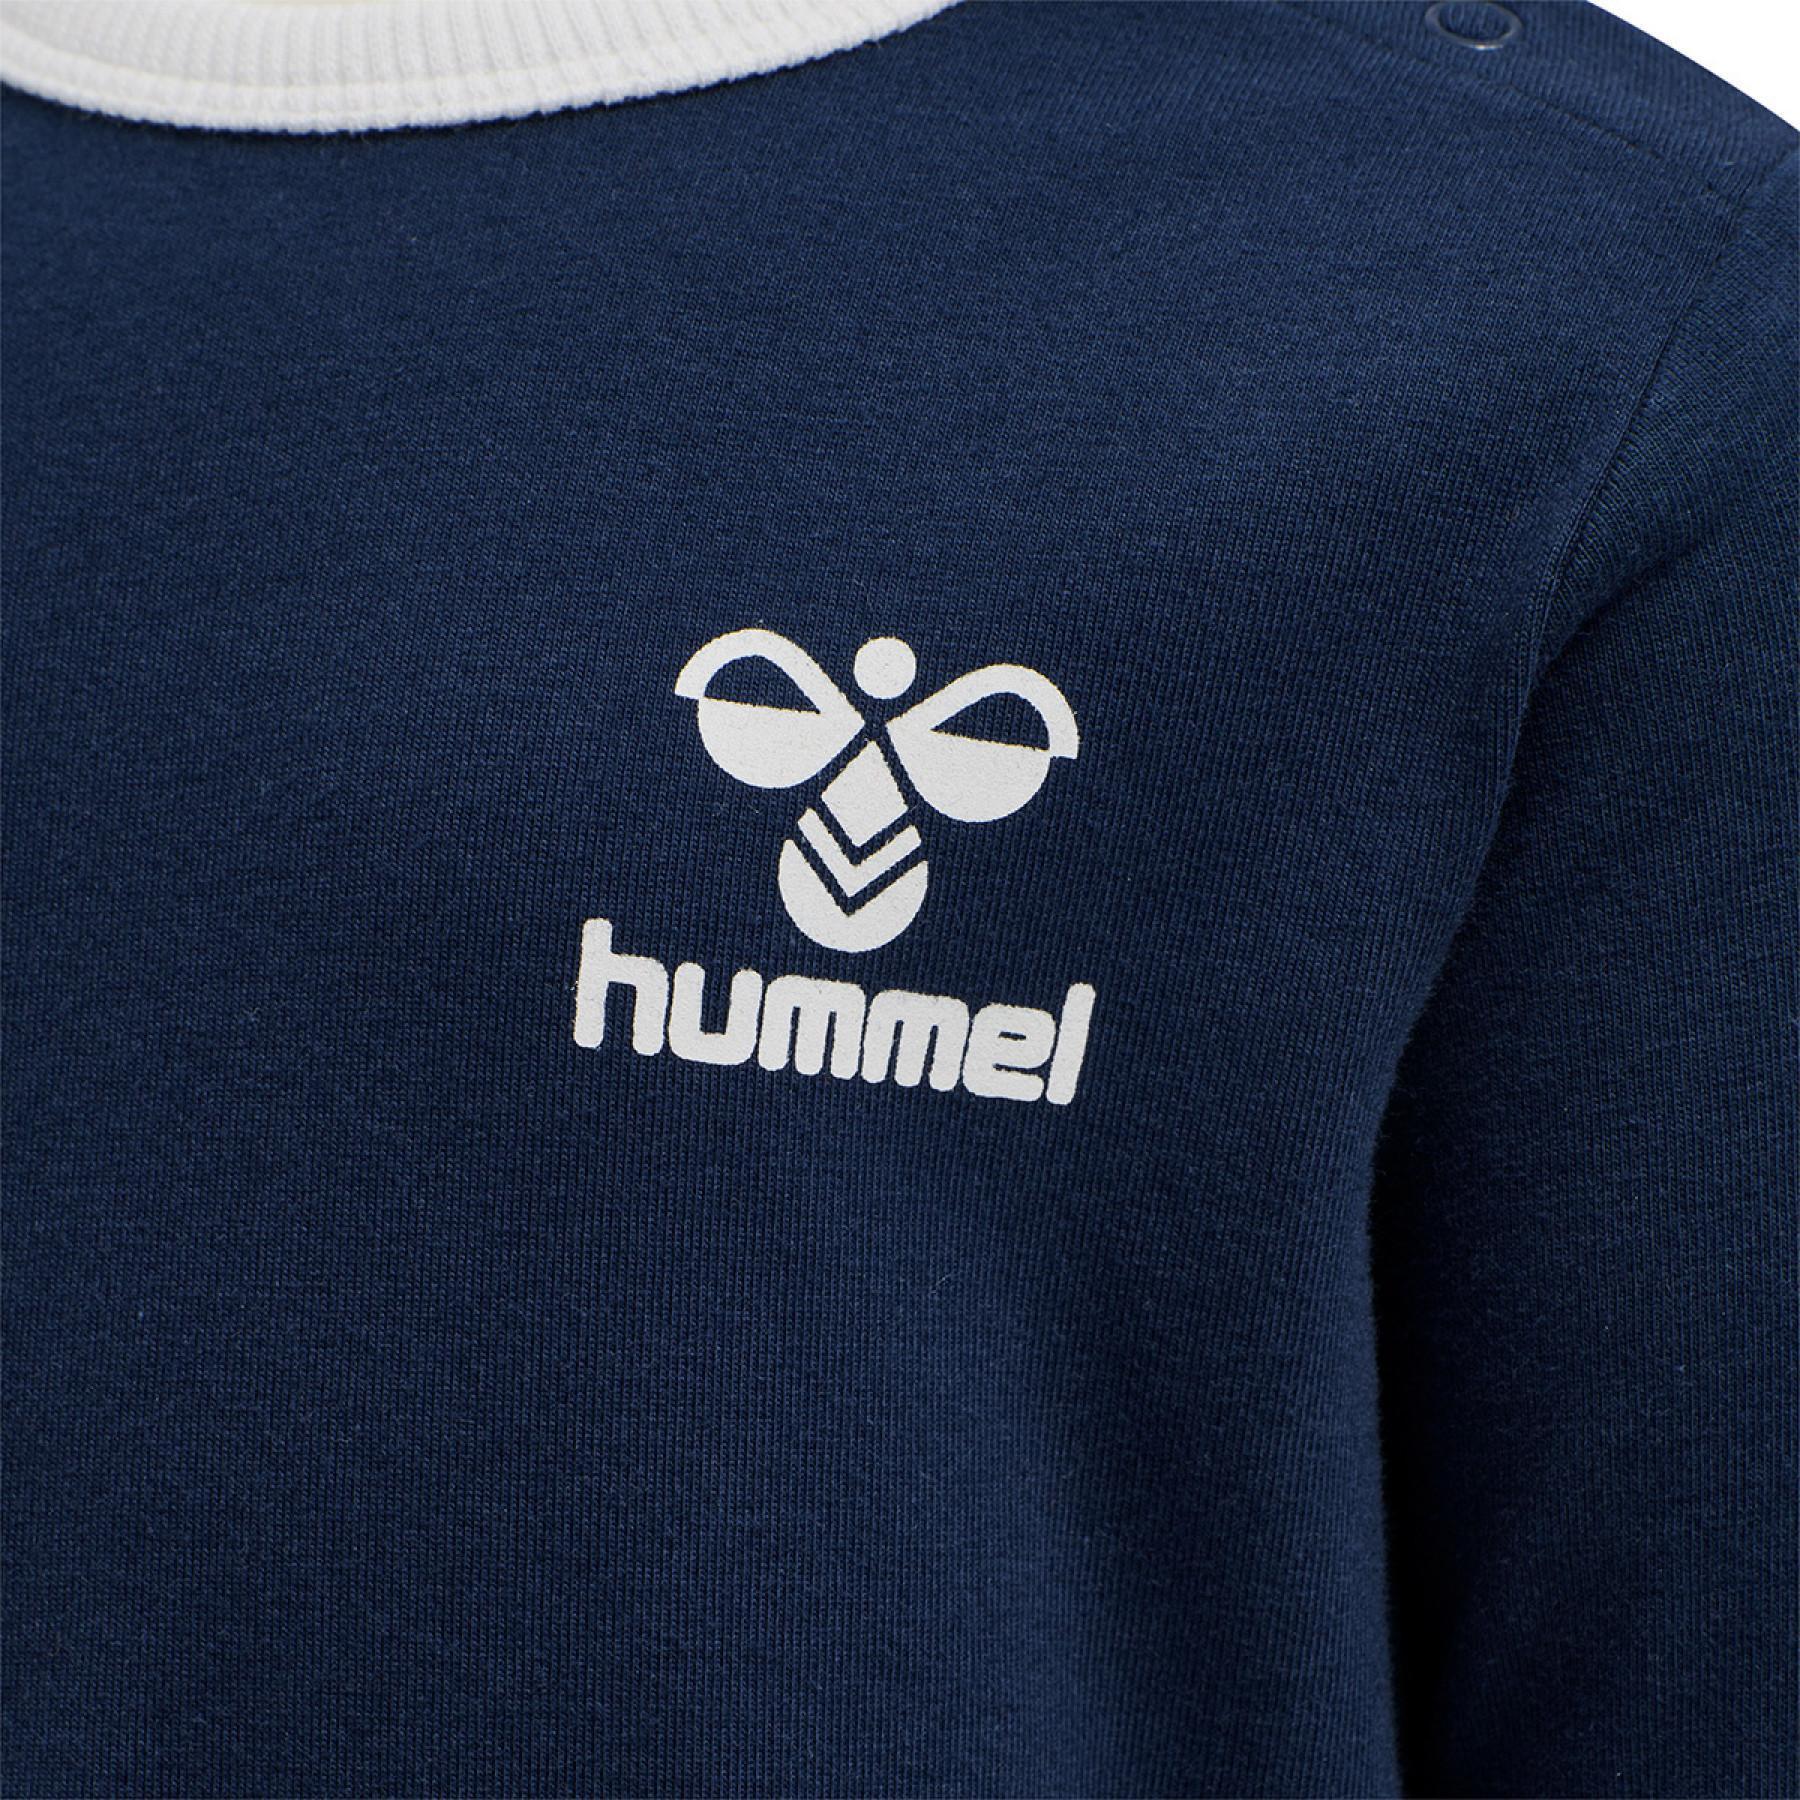 T-shirt long sleeves child Hummel hmlmaui